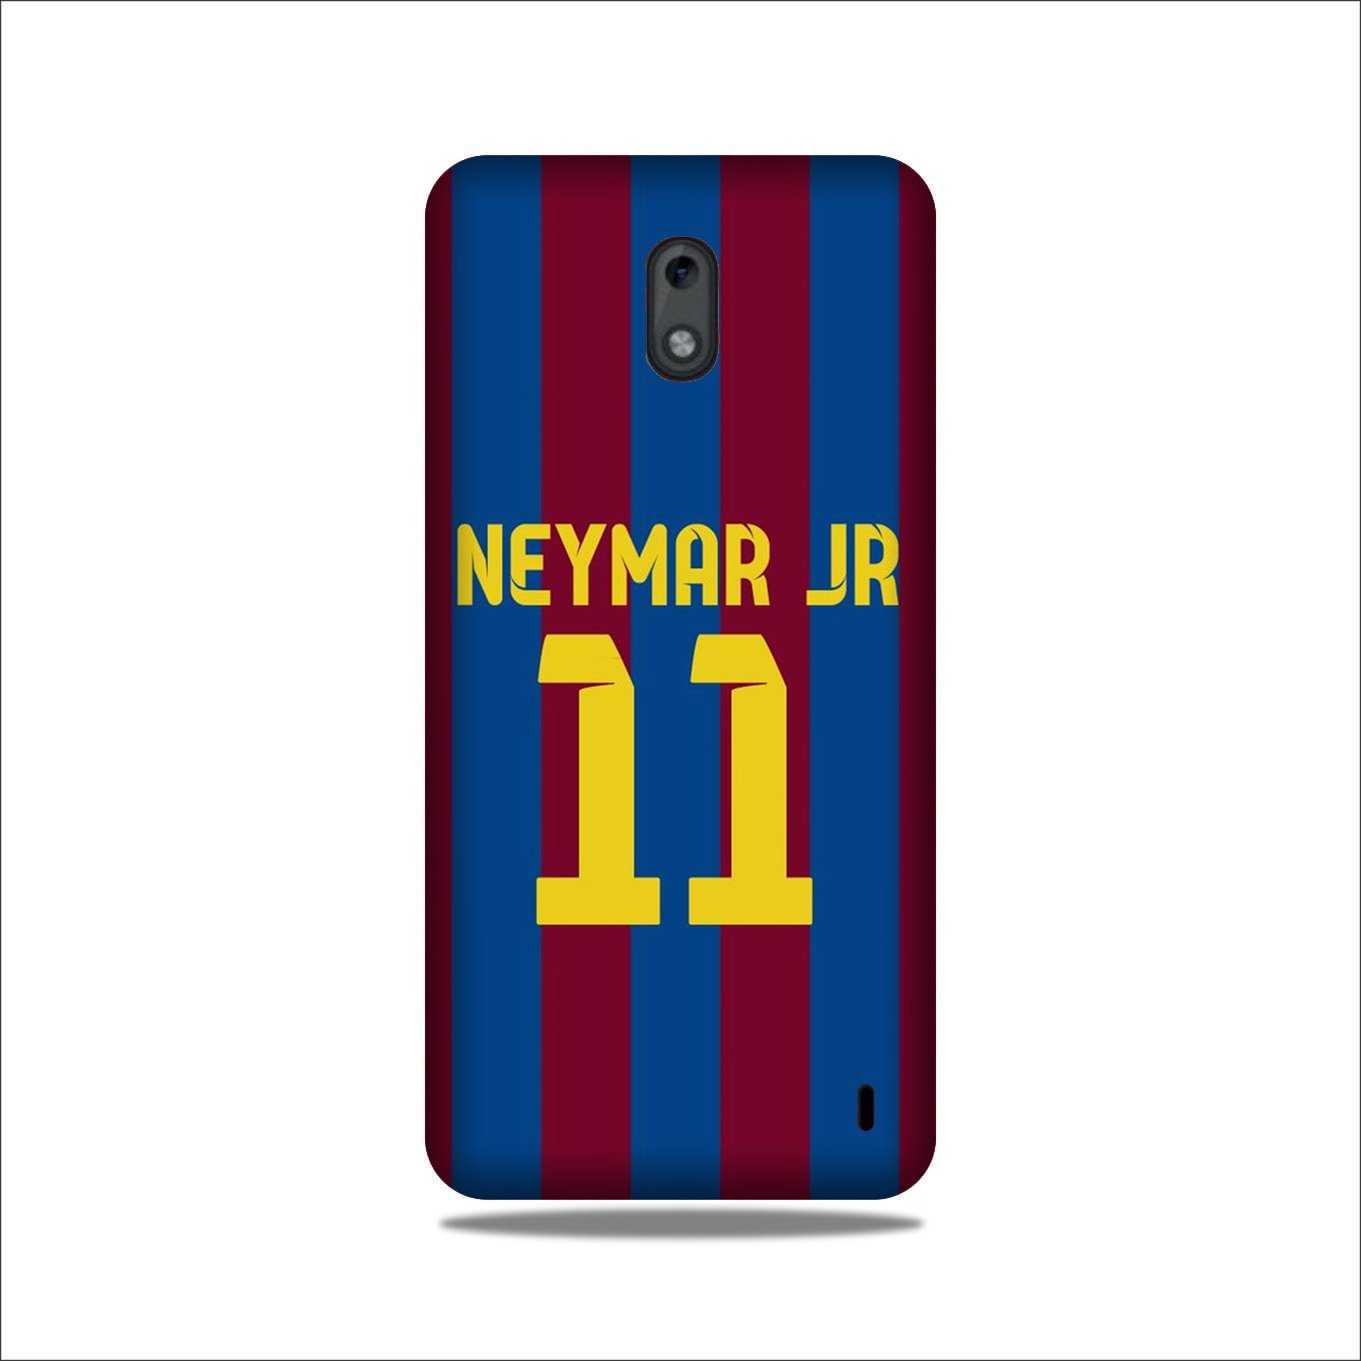 Neymar Jr Case for Nokia 2(Design - 162)